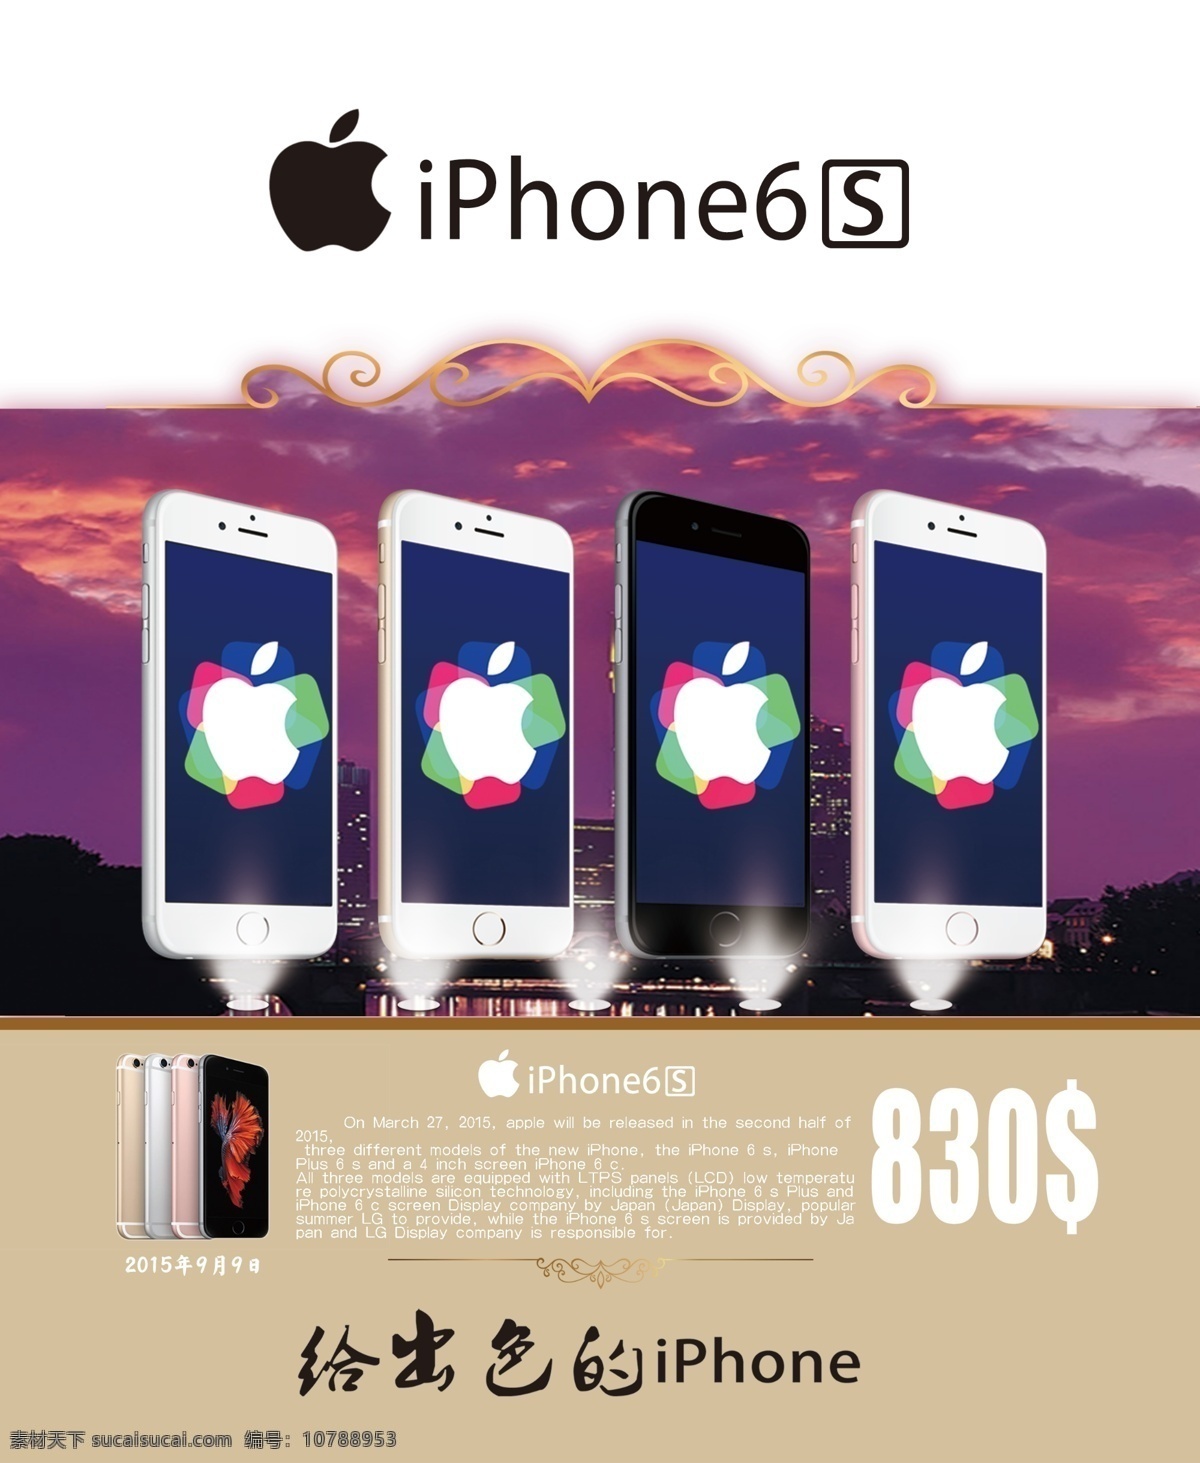 iphone6s 宣传海报 海报 彩页 iphone iphone5s iphone6 iphone4s 苹果手机 苹果 苹果6 手机 手机素材 海报杂志 现代科技 数码产品